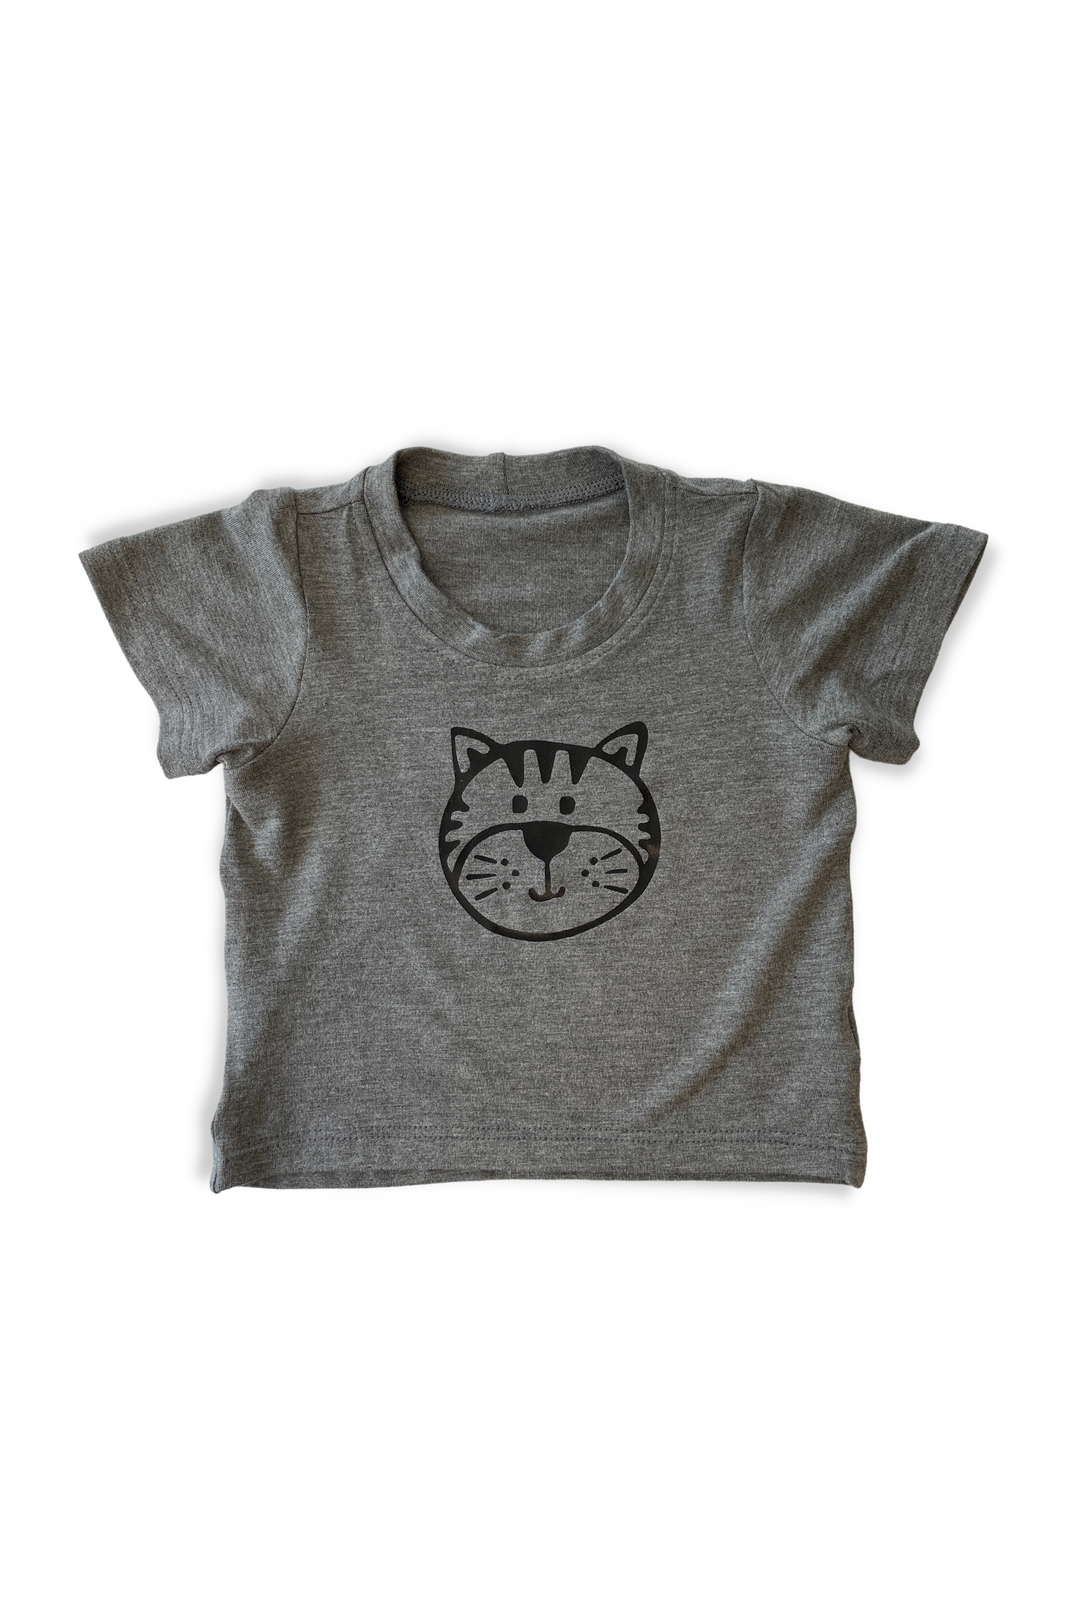 Baby t-shirt - Charles the Cat - grey